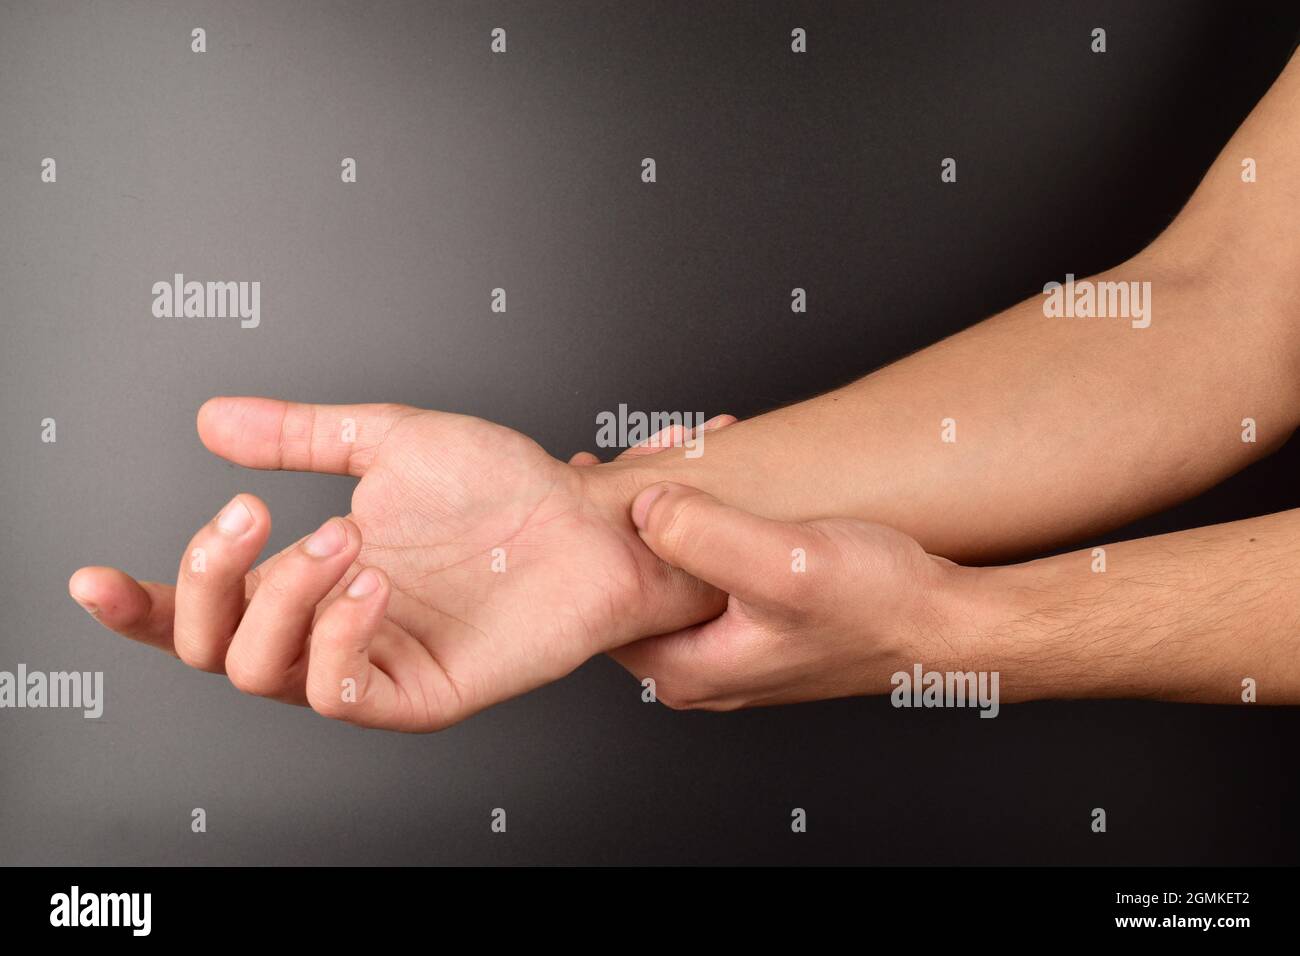 acupressure, hand doing self treatment, acupressure on black background Stock Photo